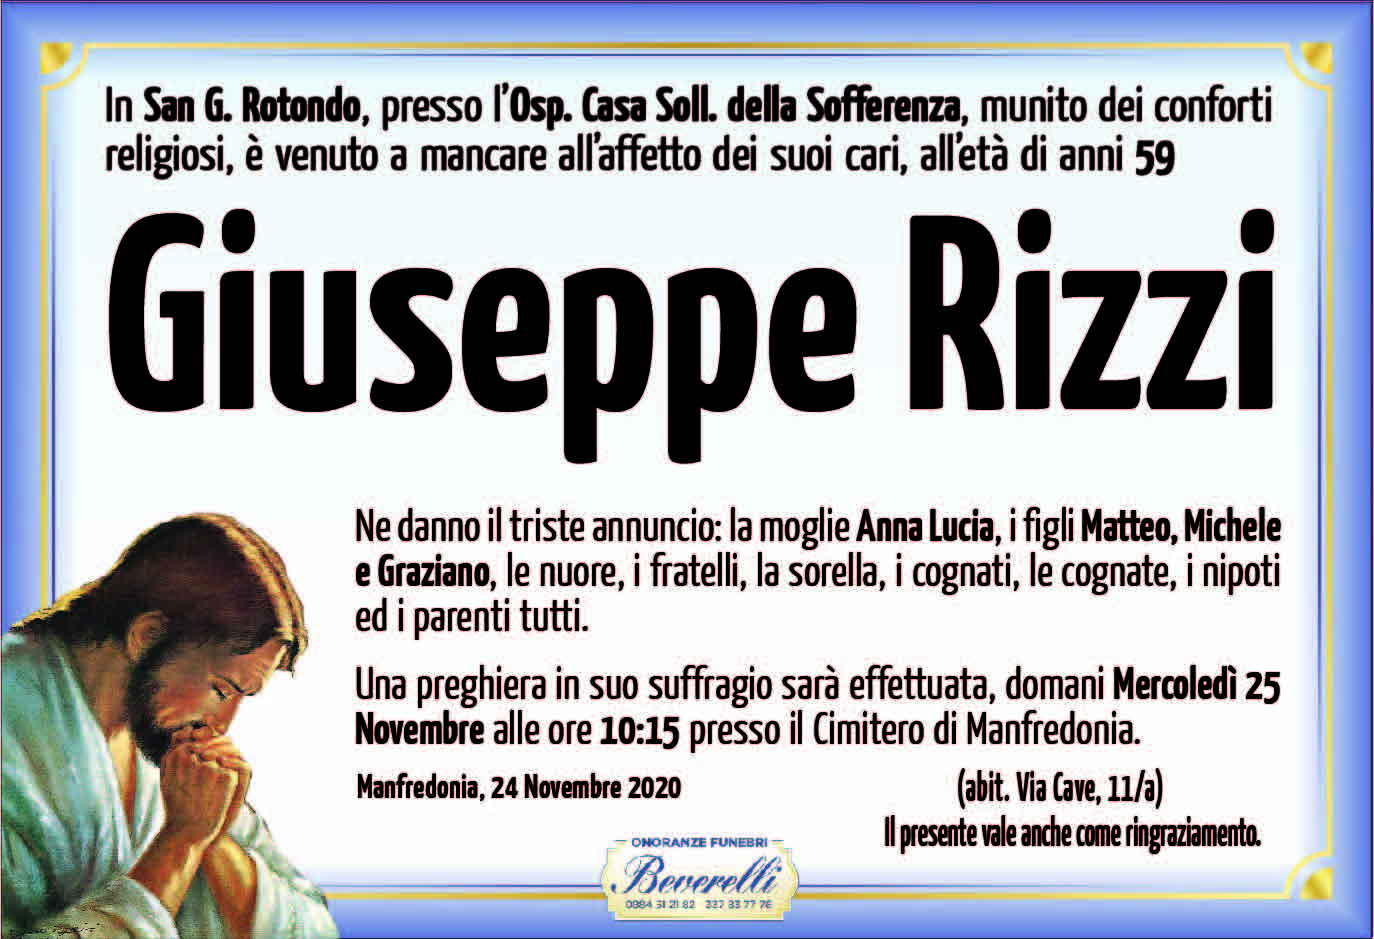 Giuseppe Rizzi